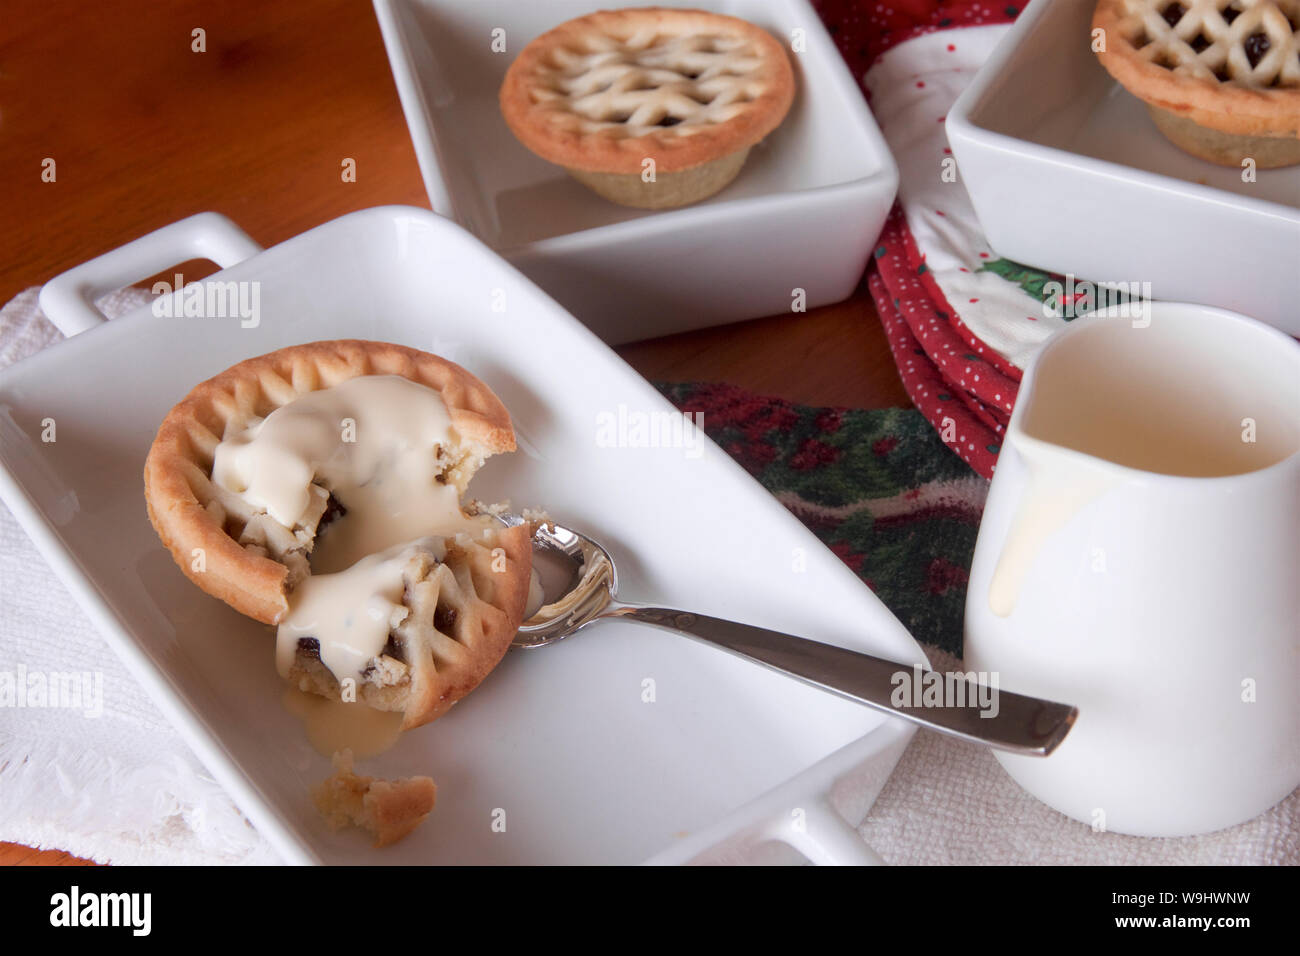 Minc tarts for desert at Christmas time. Stock Photo